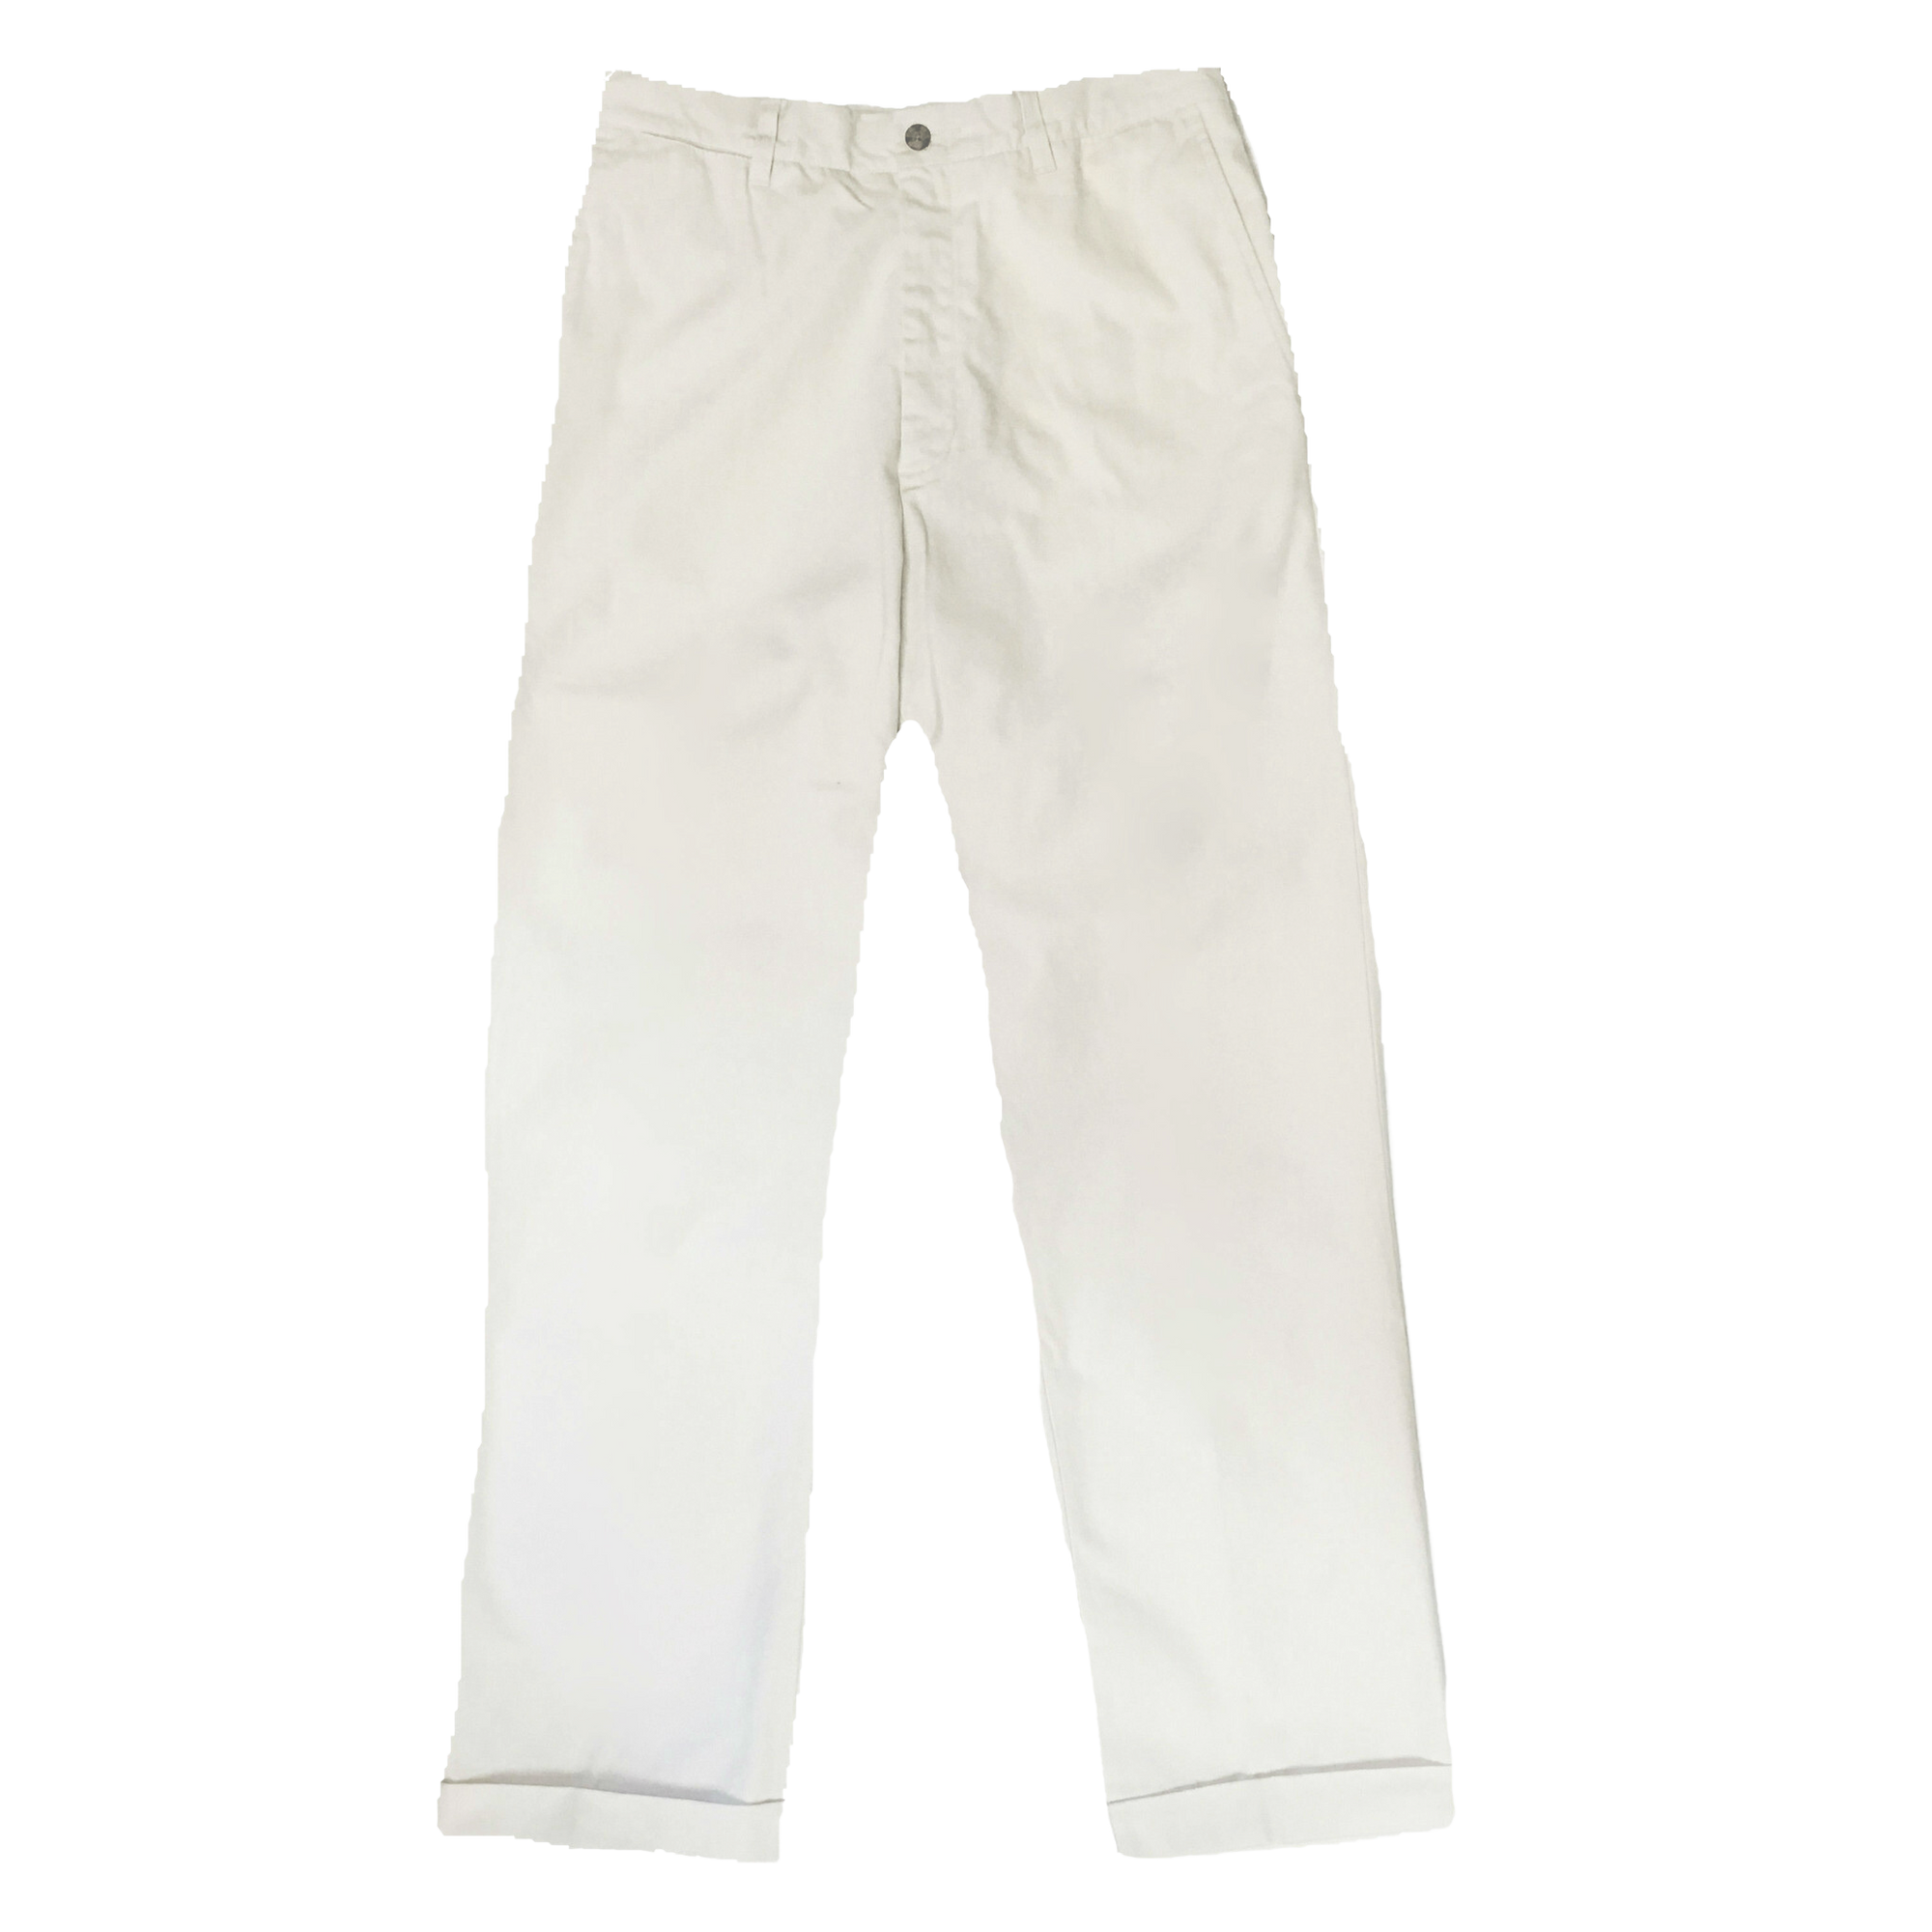 Nantucket Reds Collection® Men's Plain Front Pants - Stone